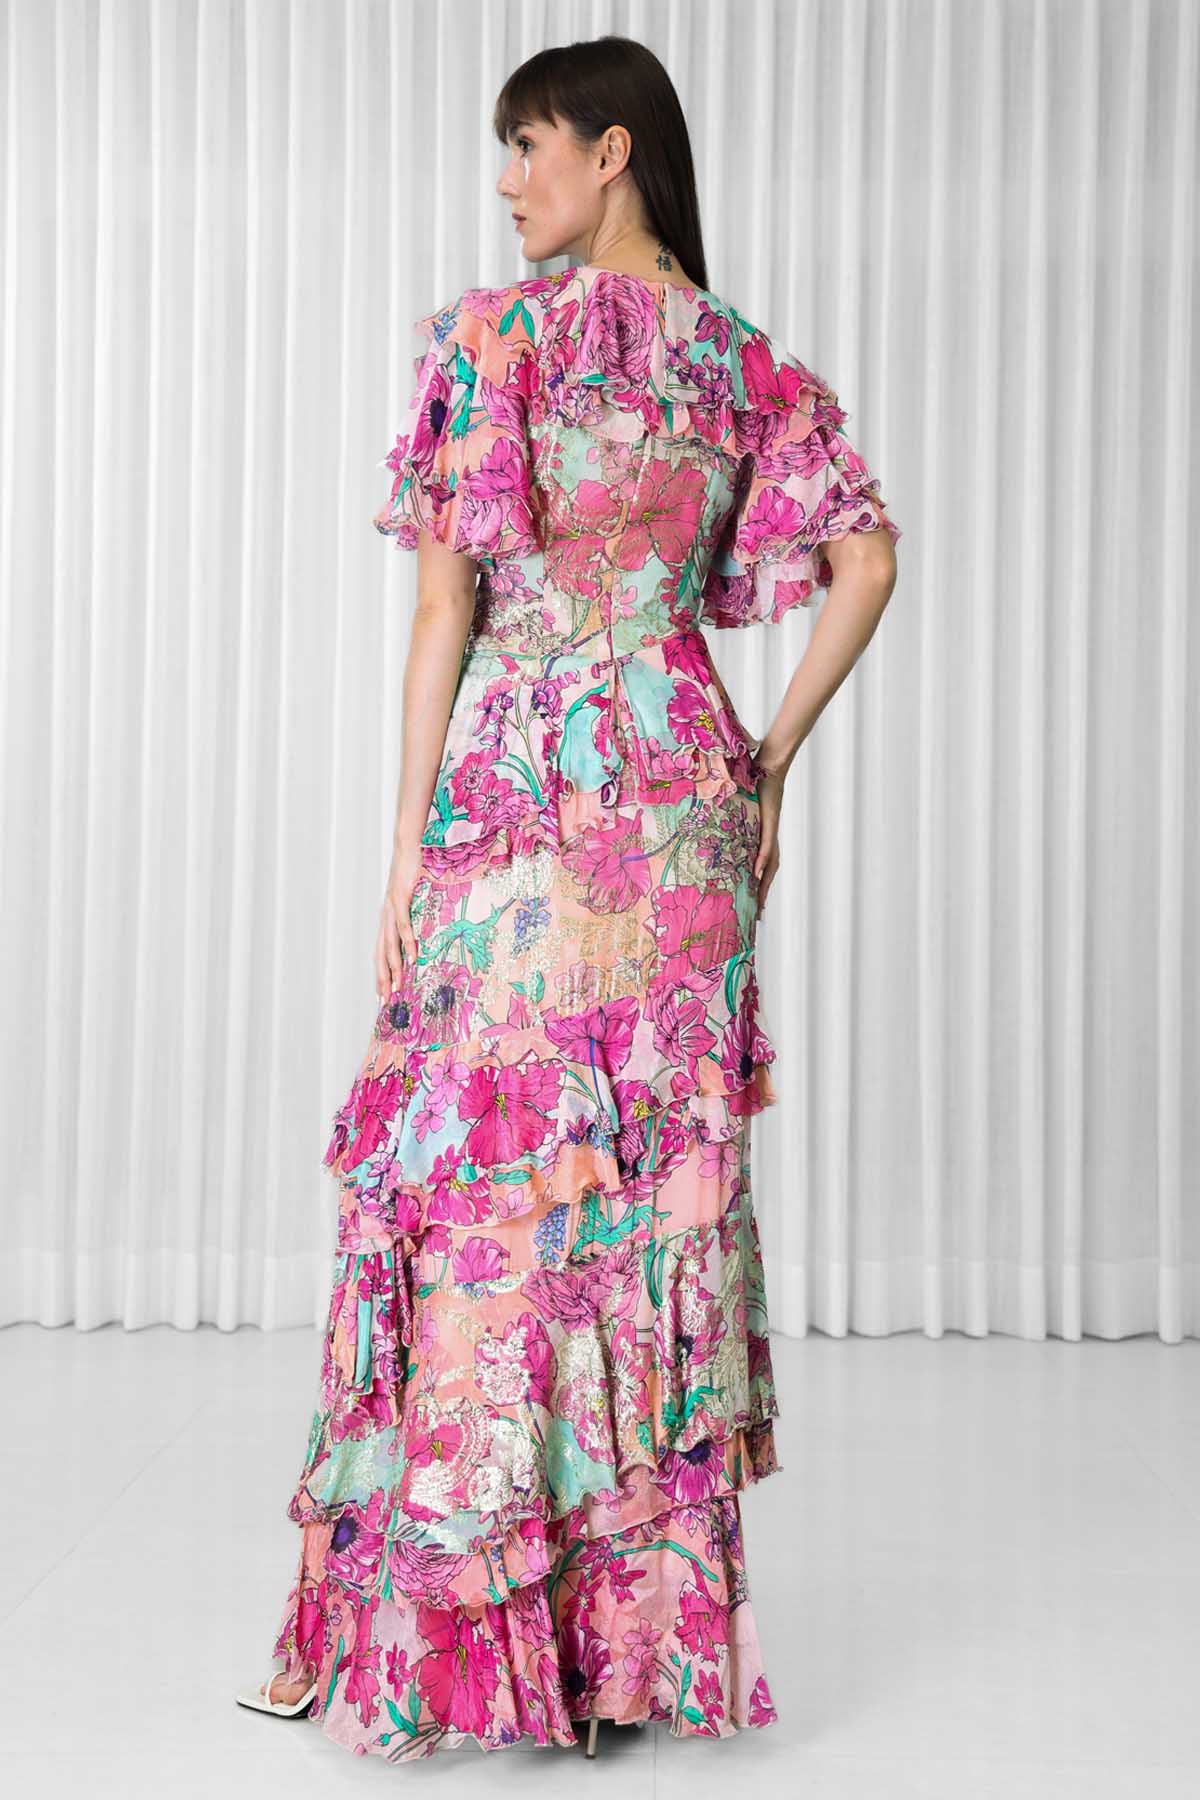 Hisbiscus Printed Chiffon Dress